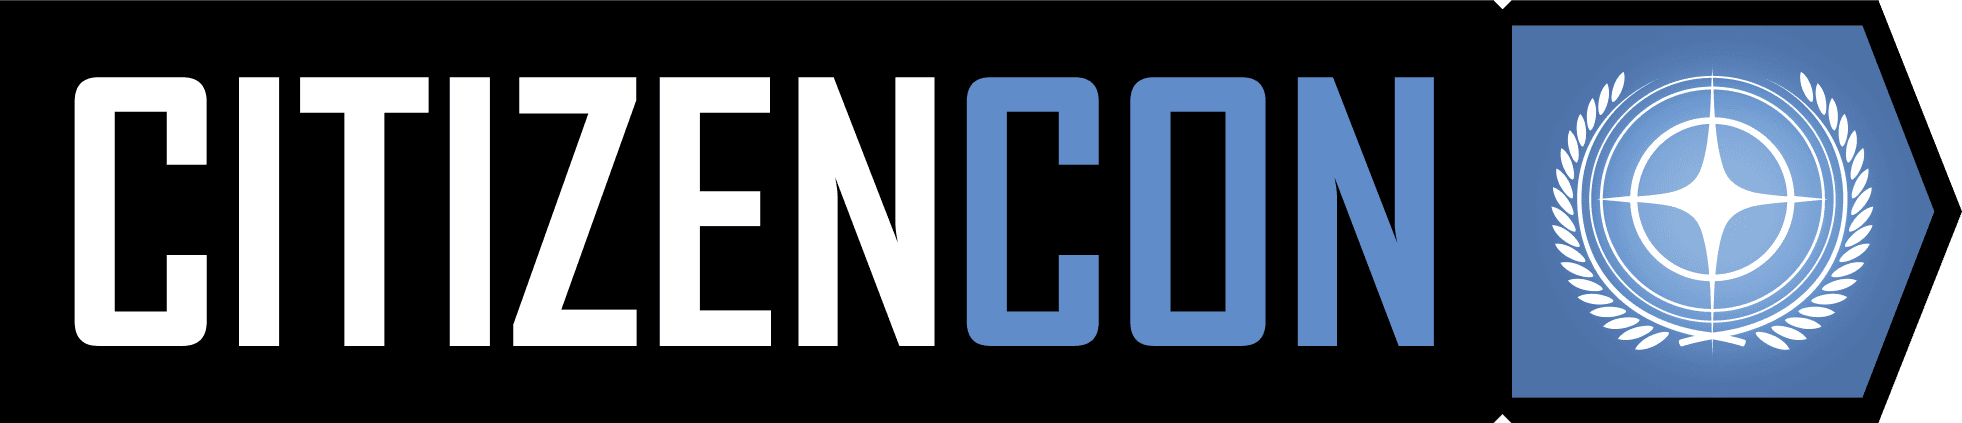 logo-cc2952.png